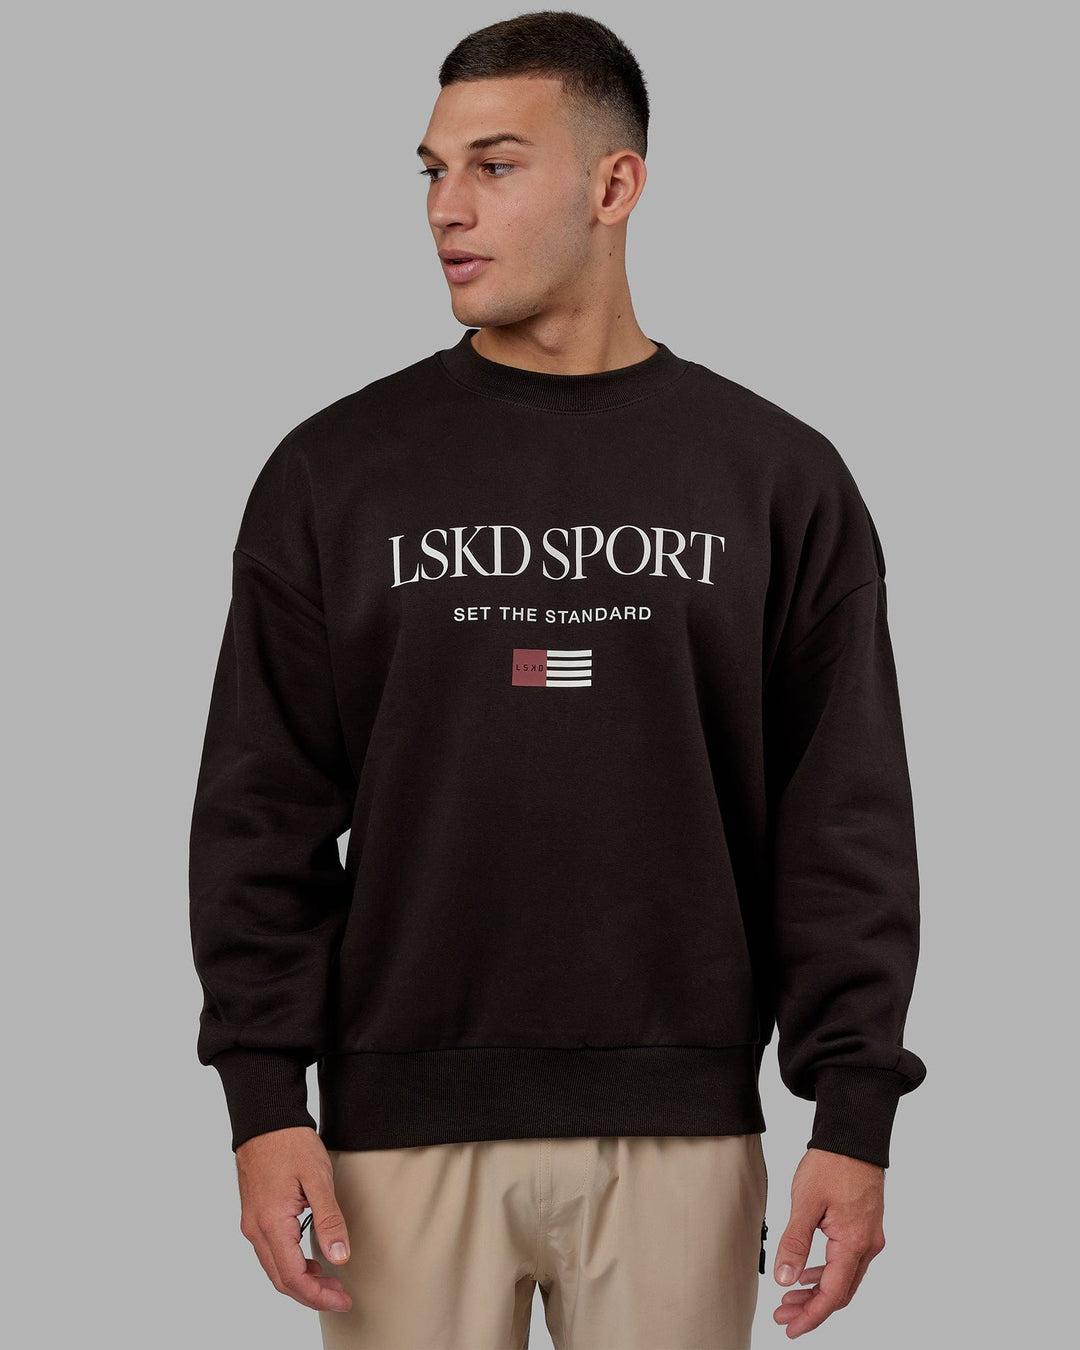 Man wearing Unisex Flag Sweater Oversize - Dark Walnut